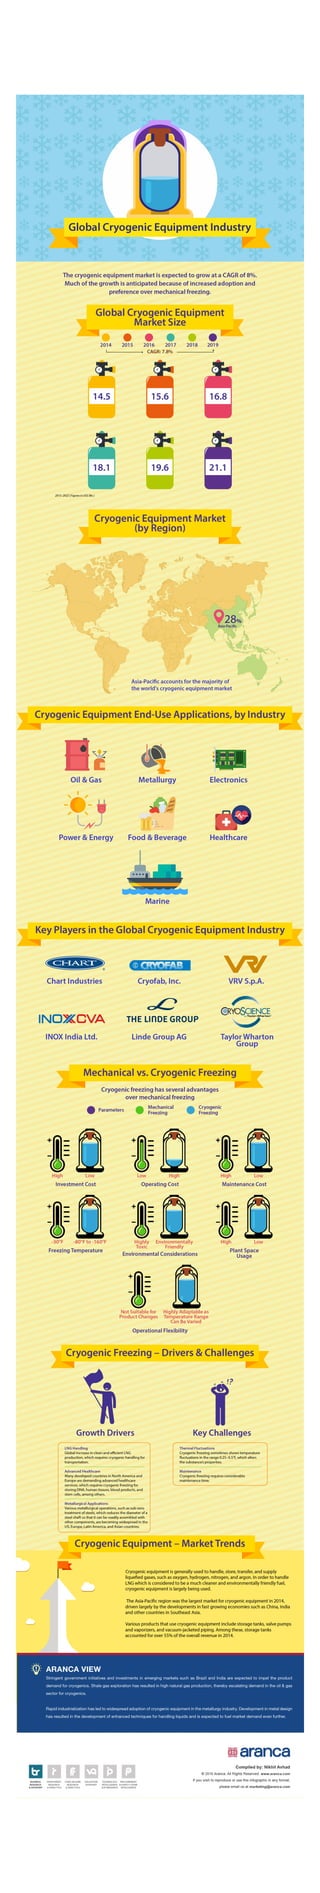 Global Cryogenic Equipment Industry